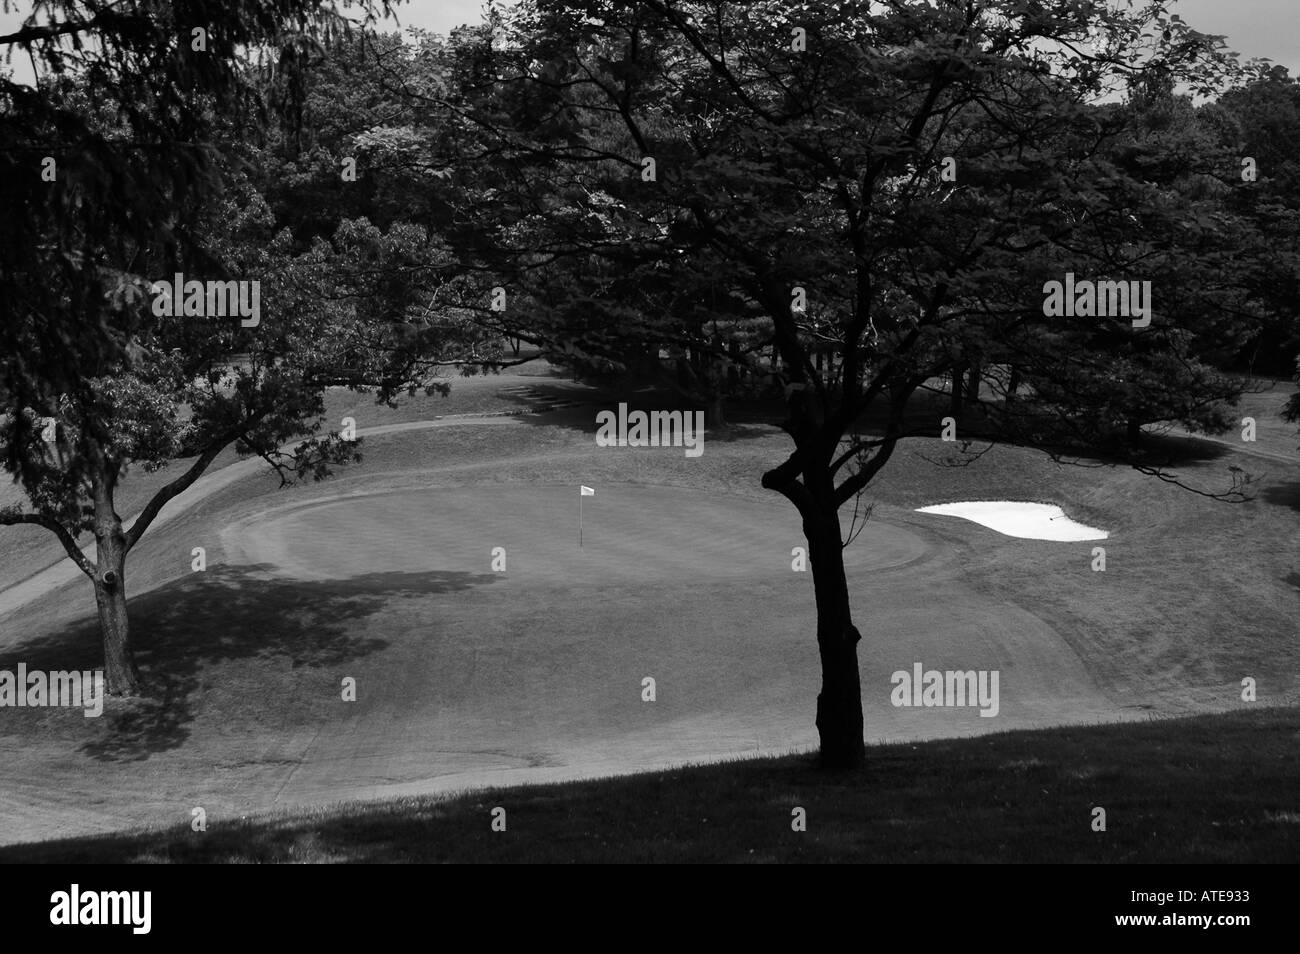 Golf course black and white landscape Stock Photo